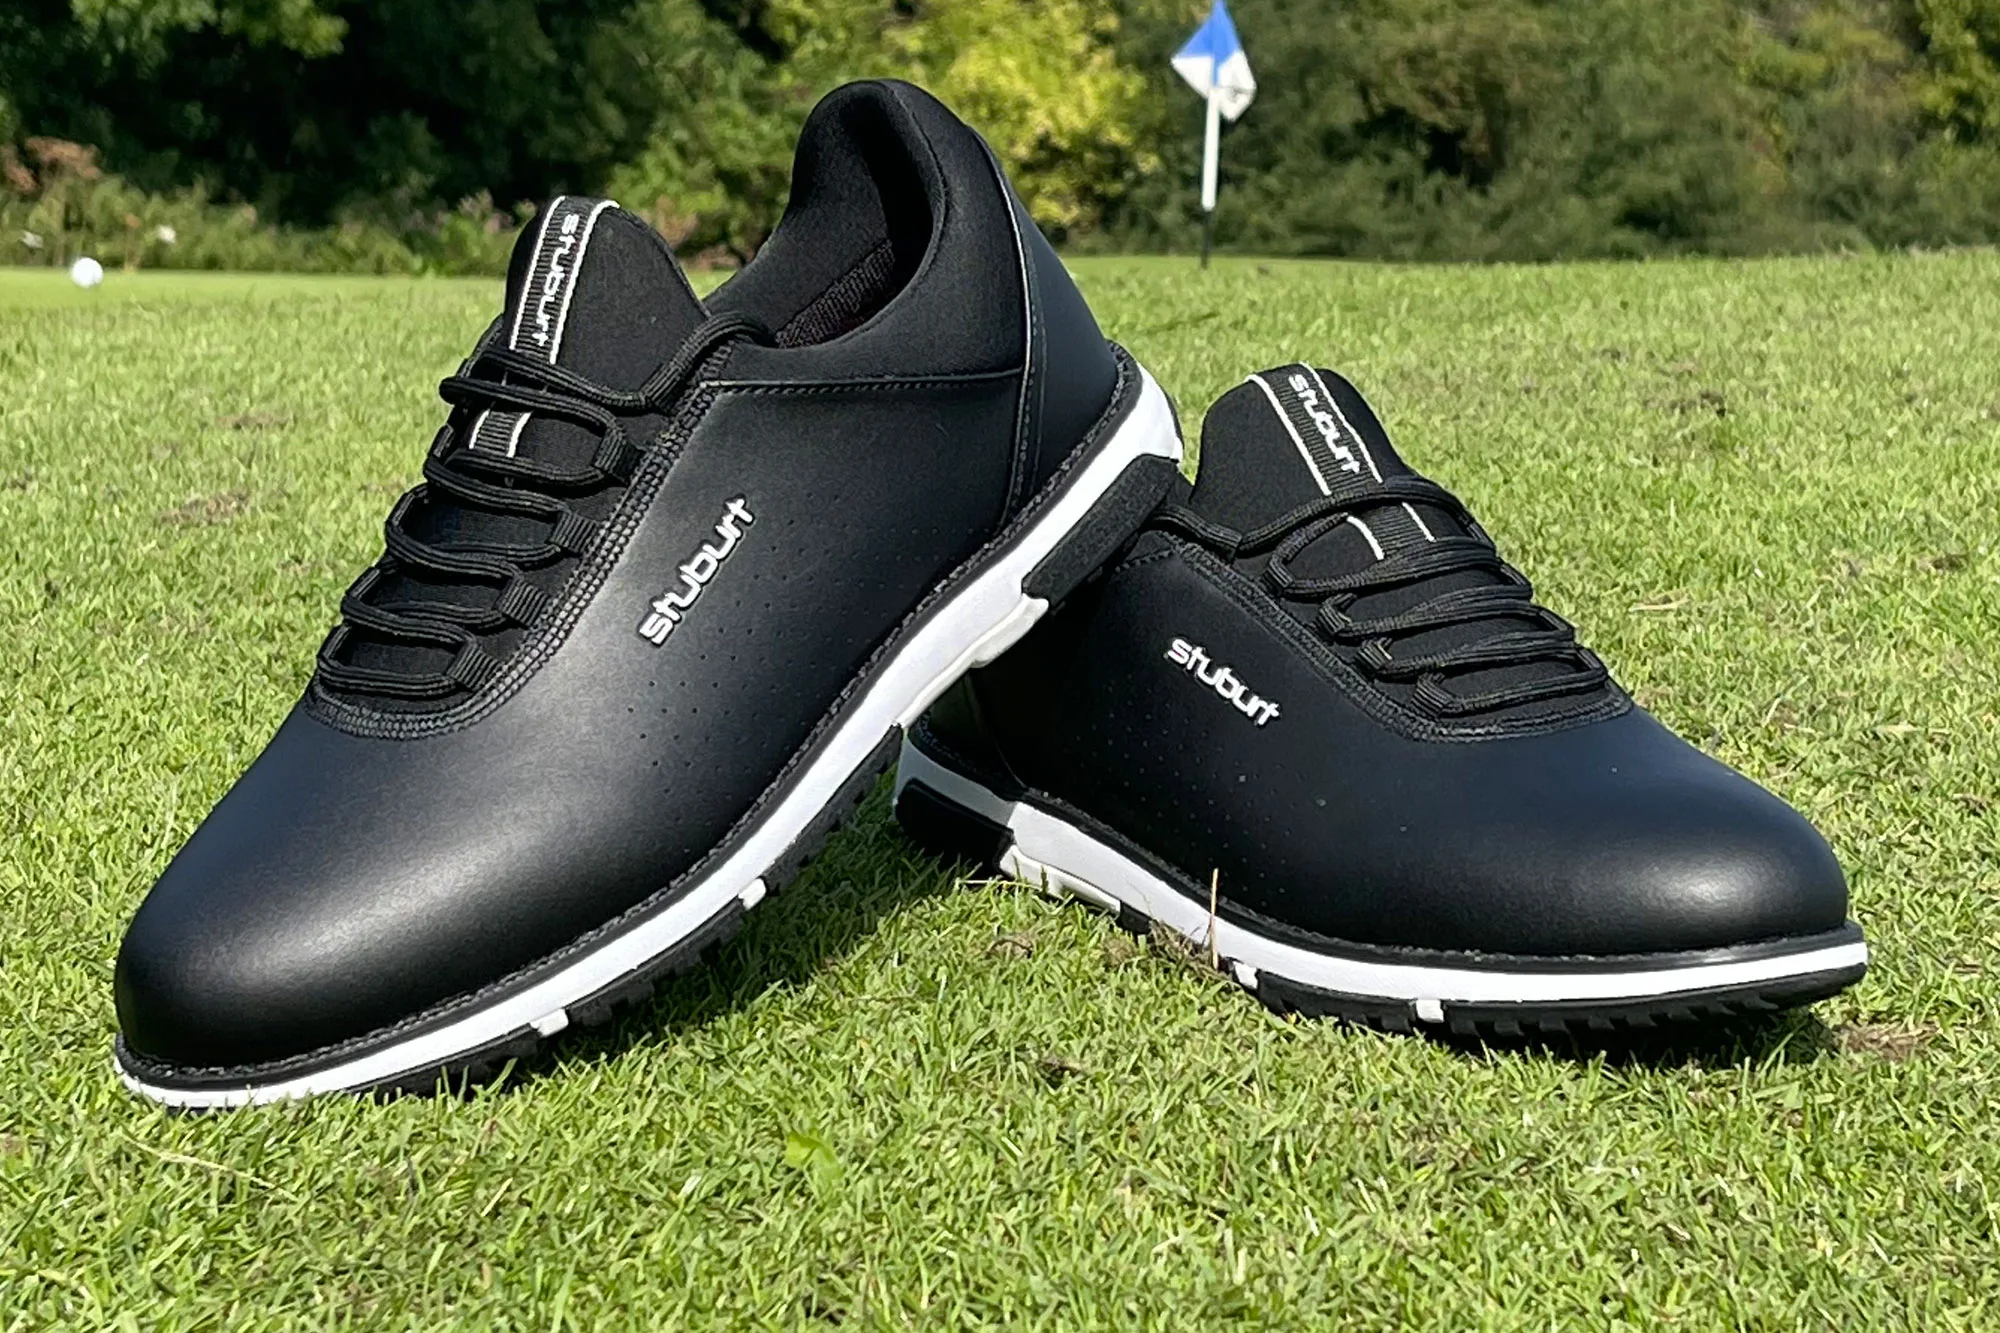 Stuburt Evolve Classic Hybrid Golf Shoe Review